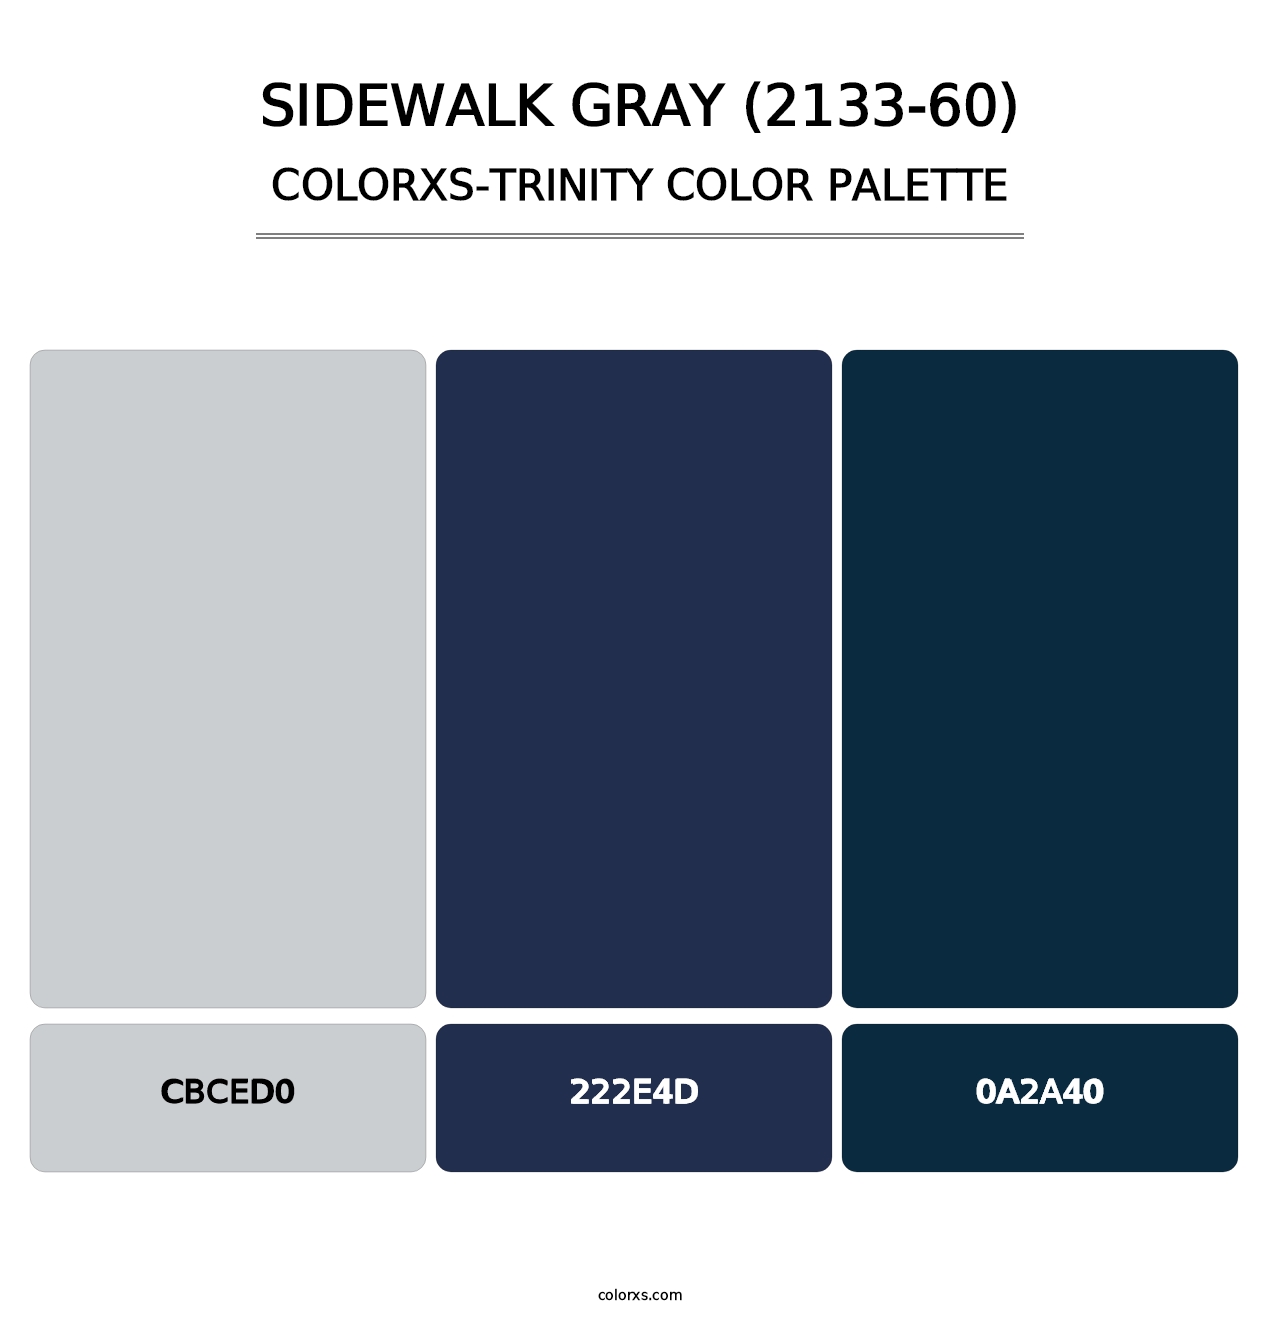 Sidewalk Gray (2133-60) - Colorxs Trinity Palette